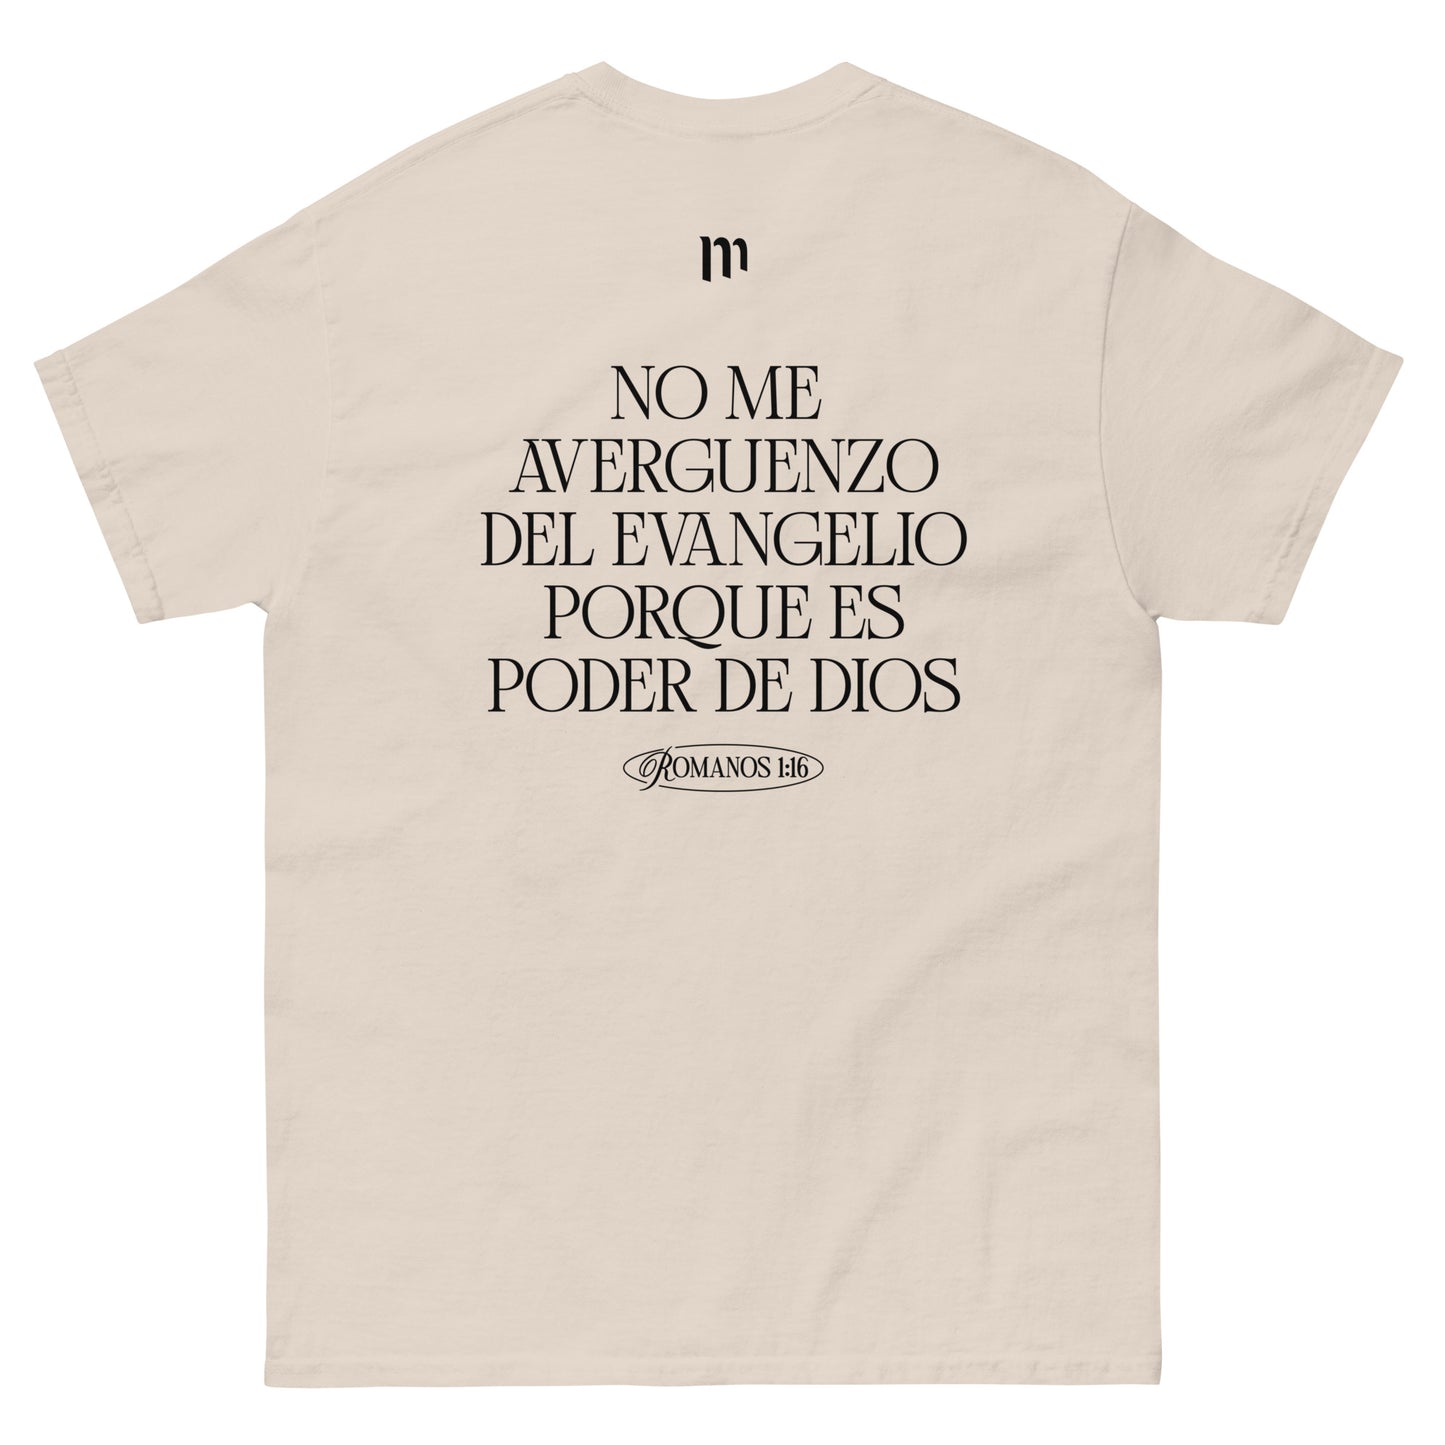 No me avergüenzo - Camiseta clásica Miel San Marcos